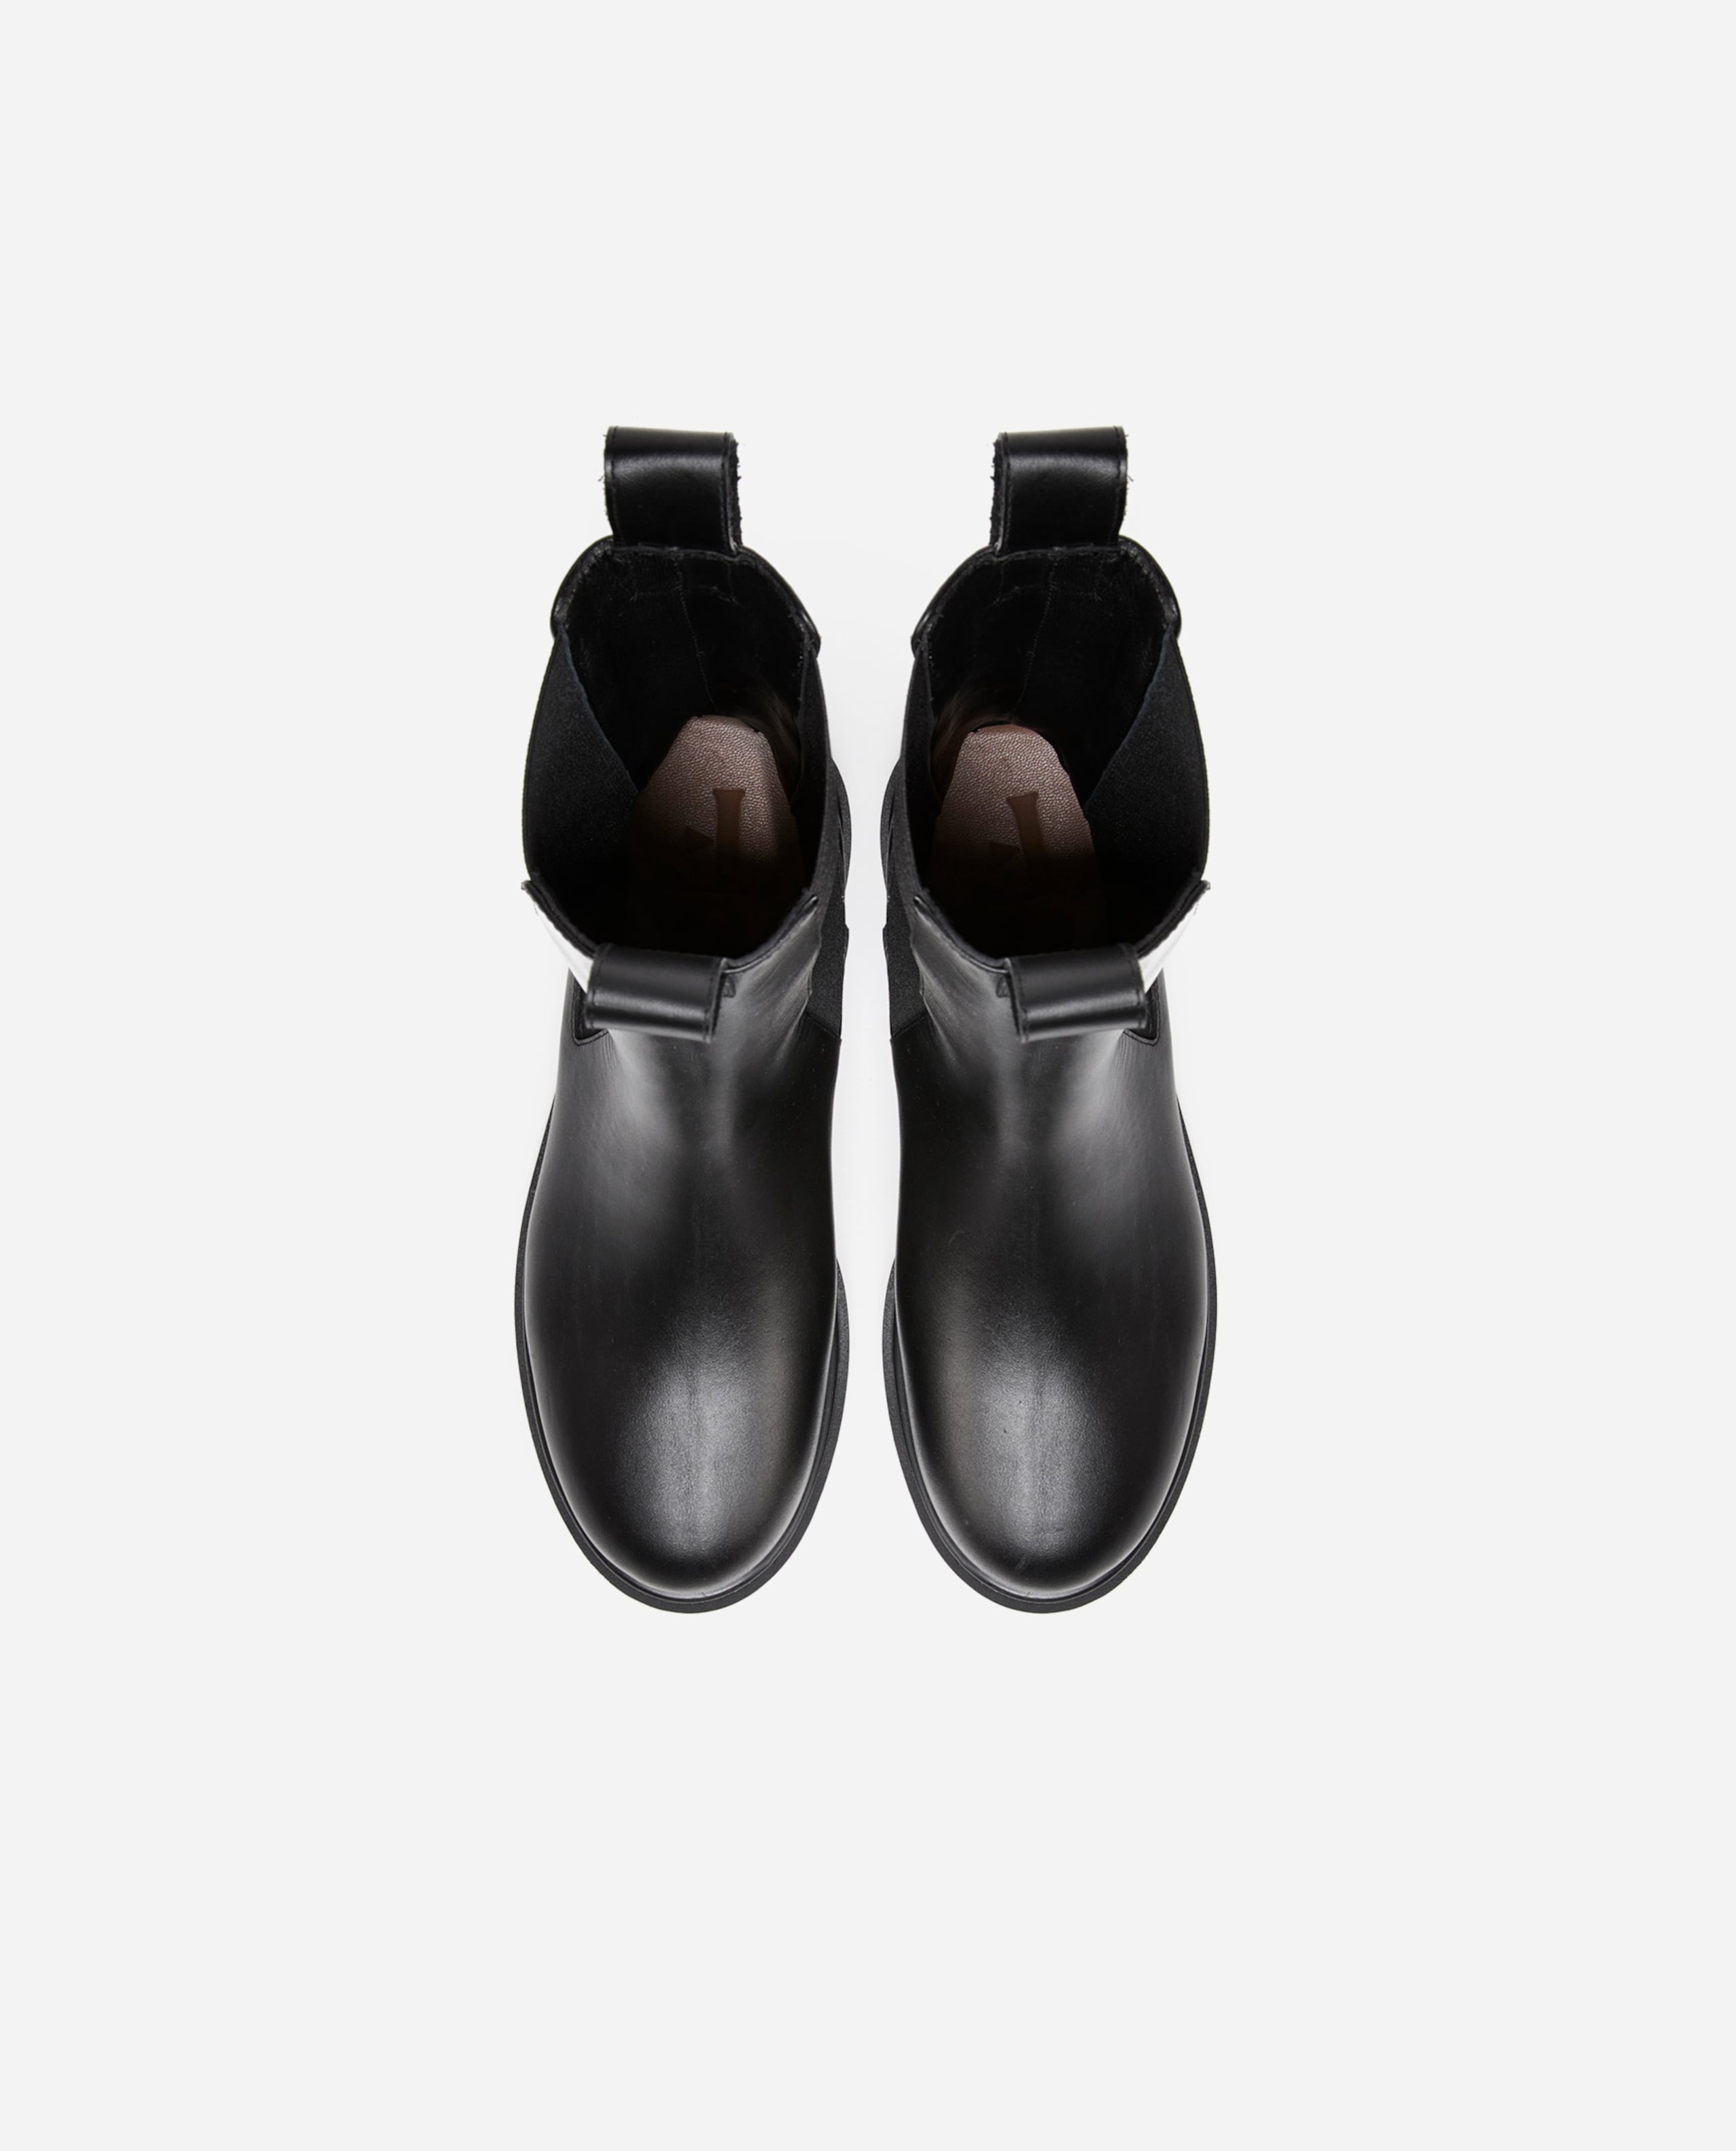 Lia Black Leather Chelsea Boots 20020813901-001 -04